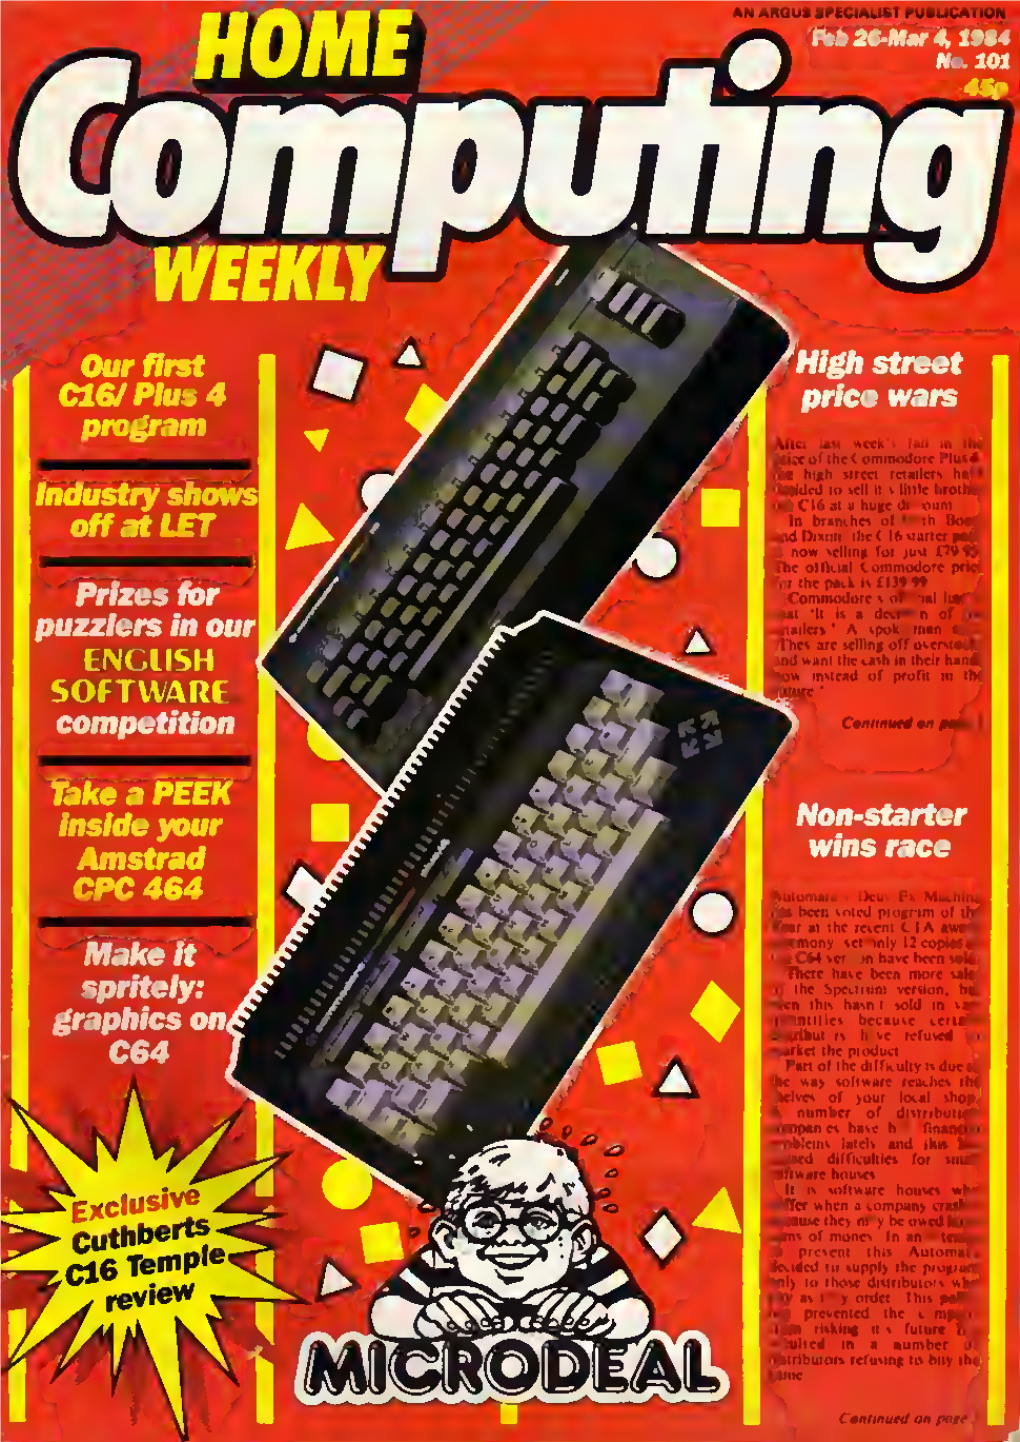 Home Computing Weekly Magazine Issue